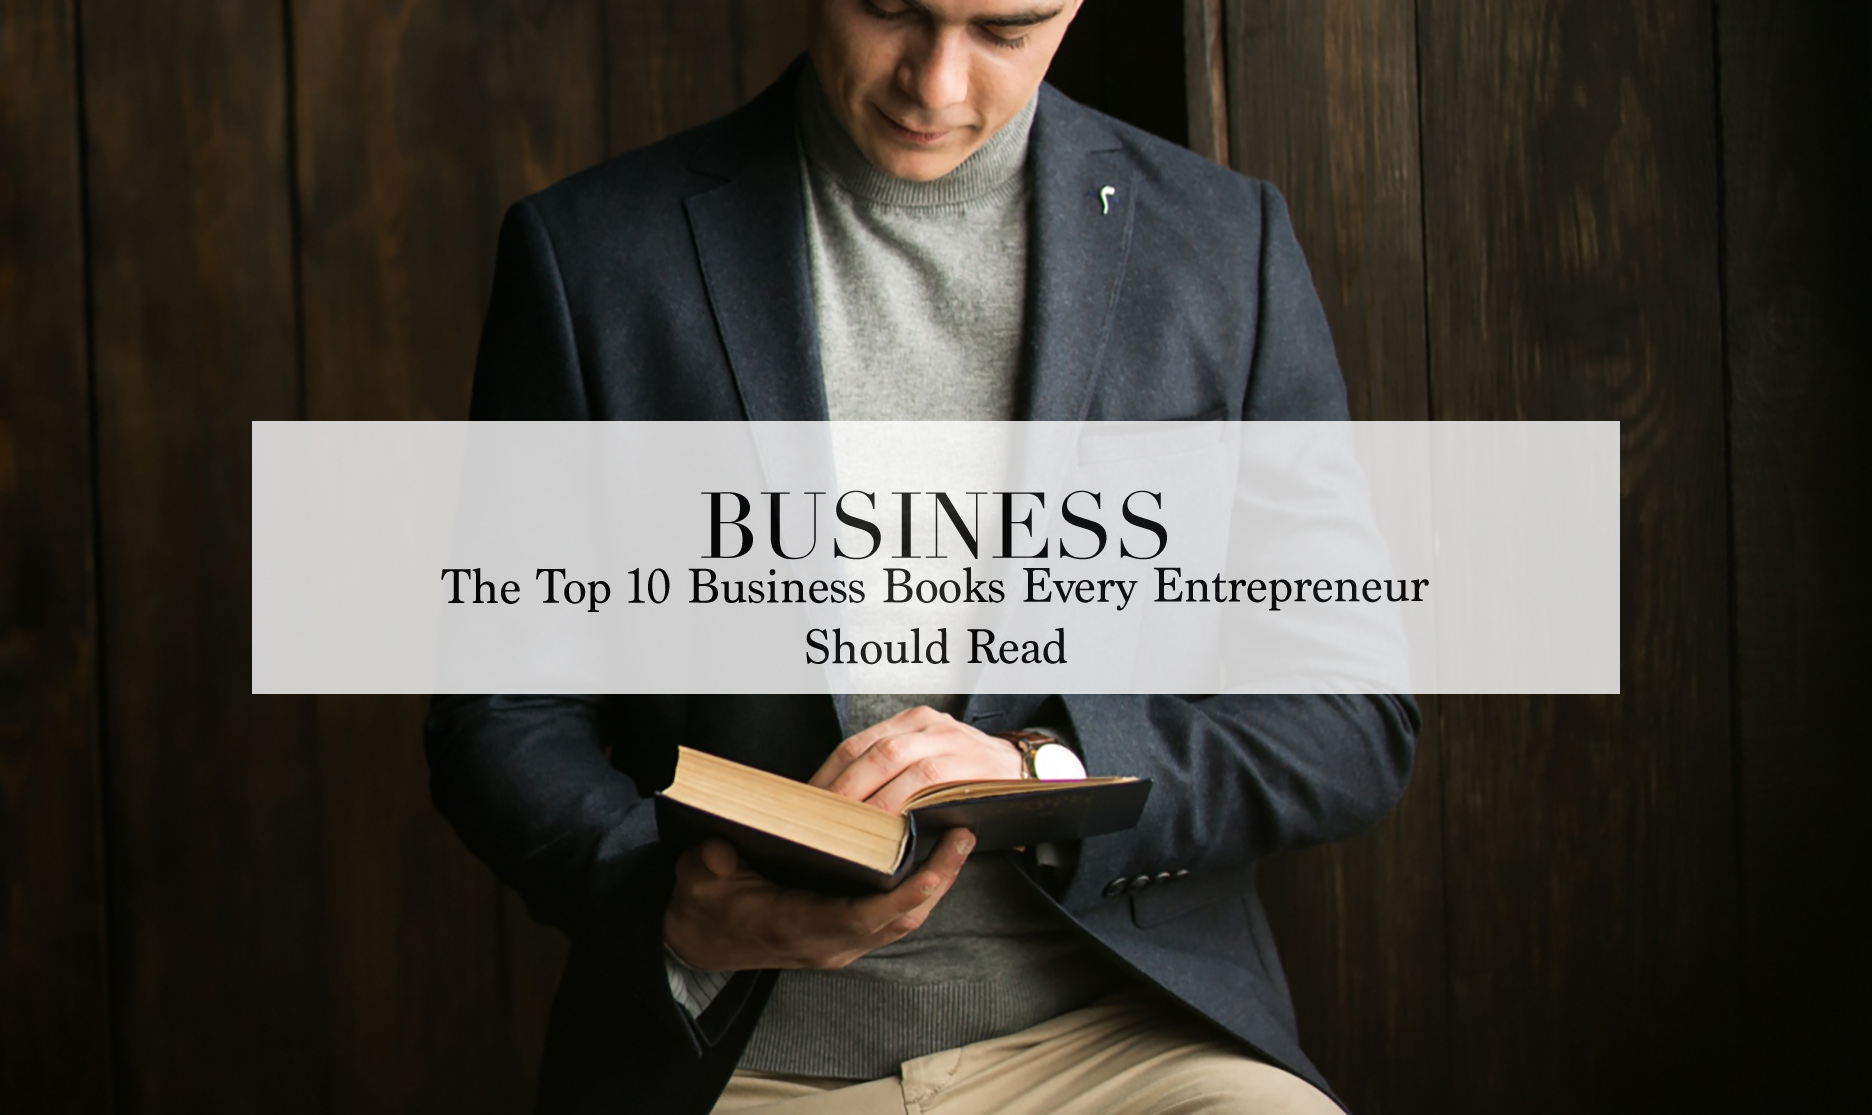 business-books